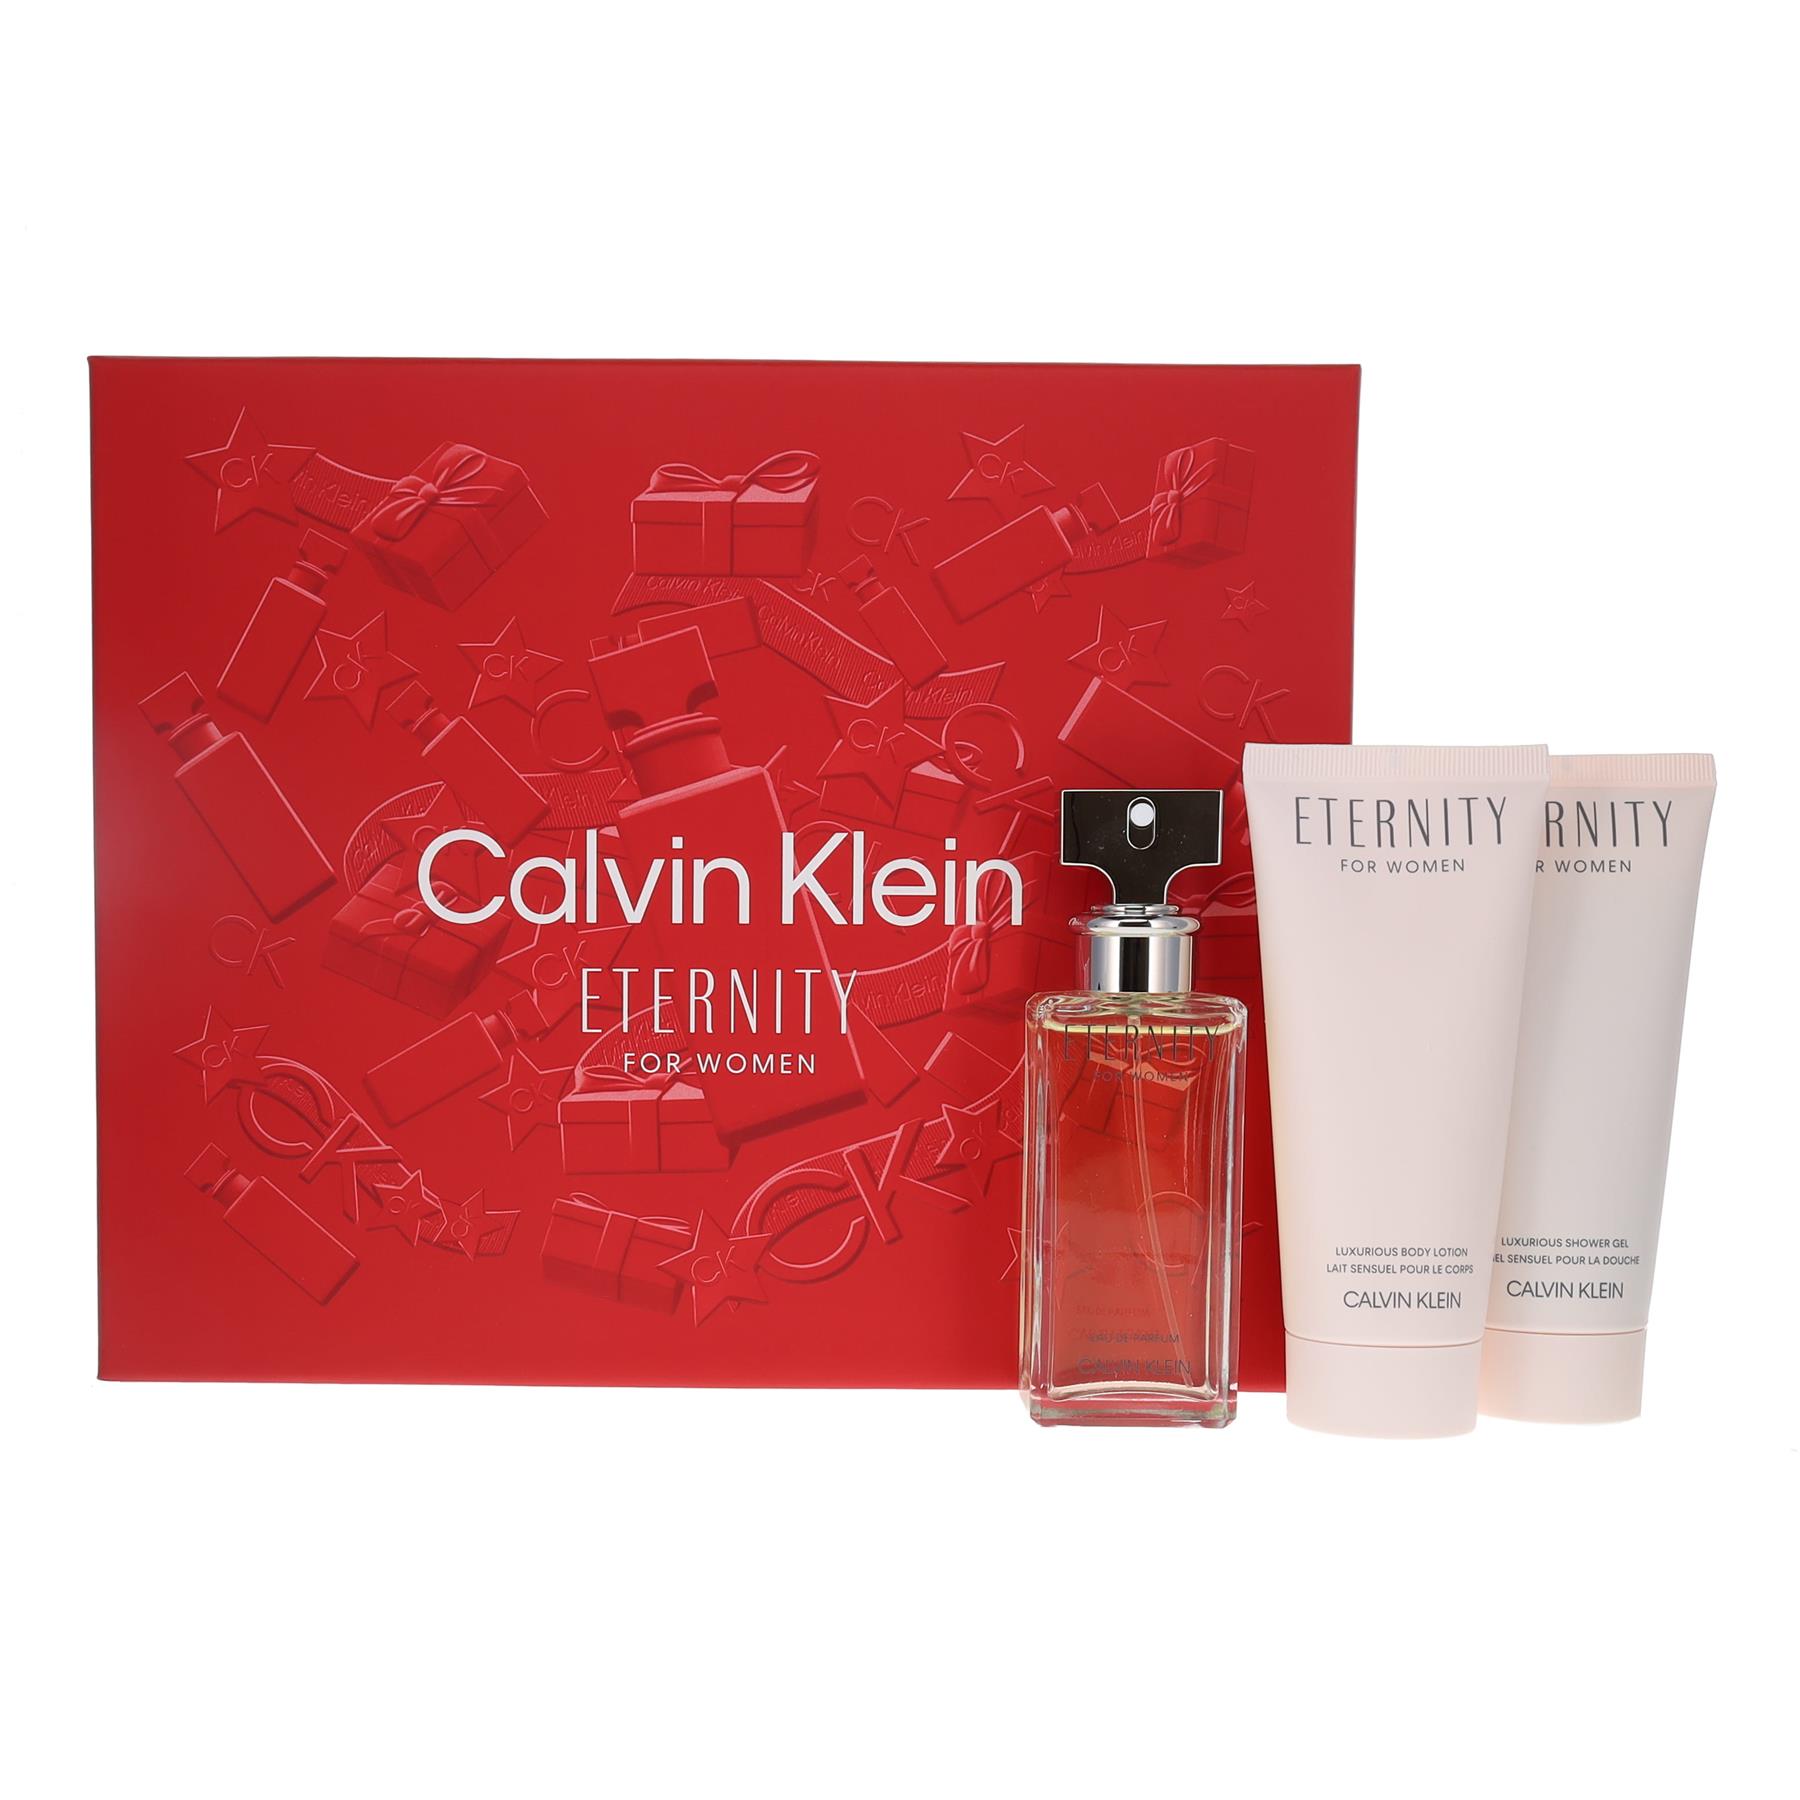 Calvin Klein Eternity 50ml Eau de Parfum Spray Gift Set 100ml Body Lotion, 100ml Shower Gelfor Her from Perfume Plus Direct